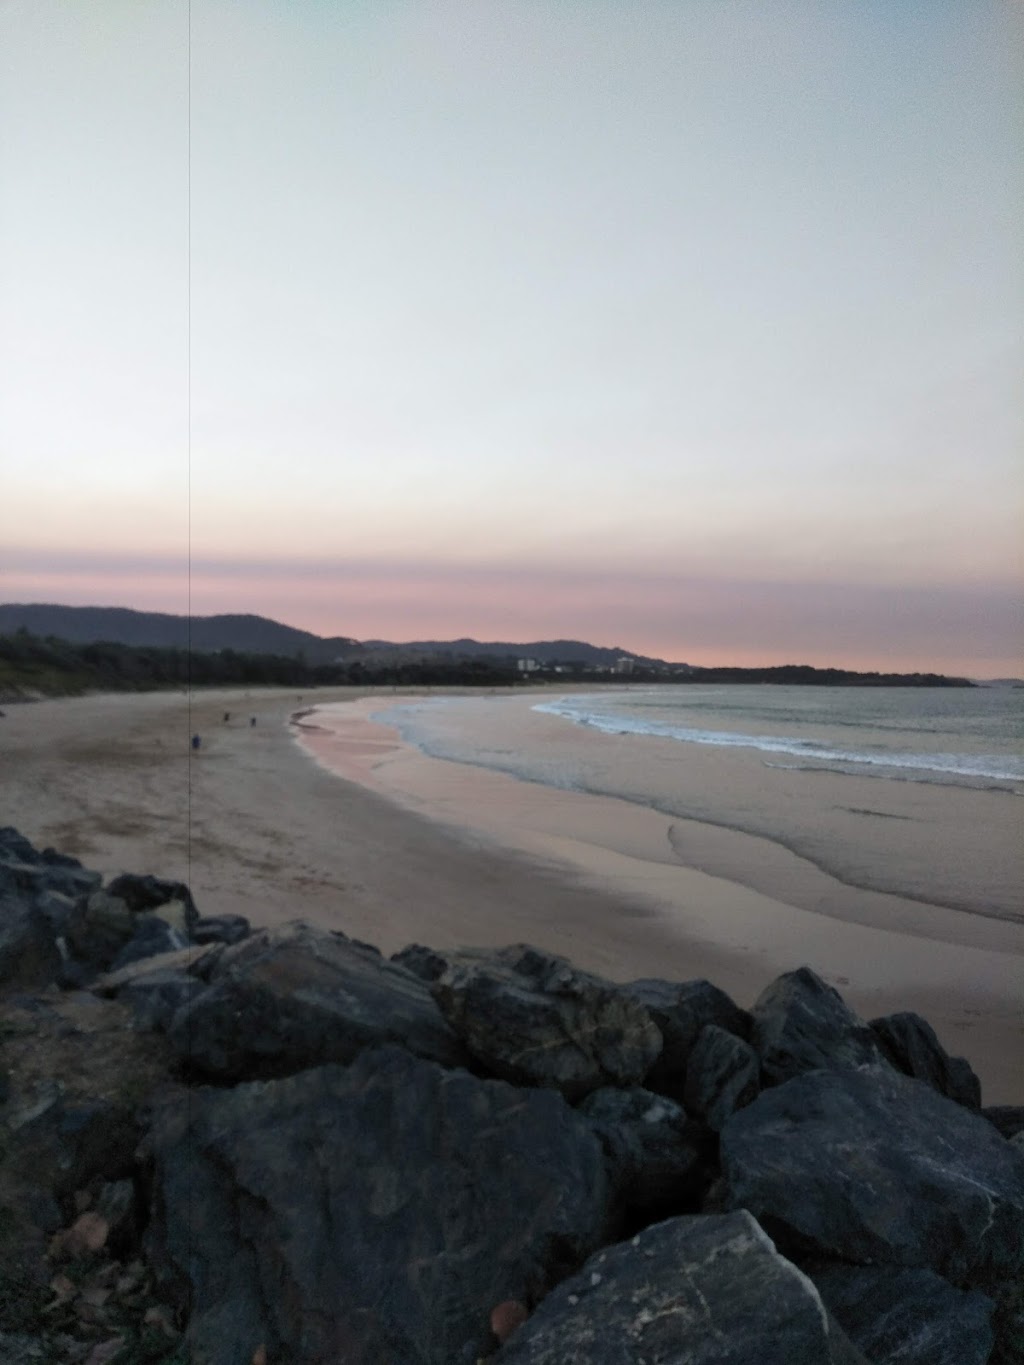 Woolgoolga Beach Reserve | park | Woolgoolga NSW 2456, Australia